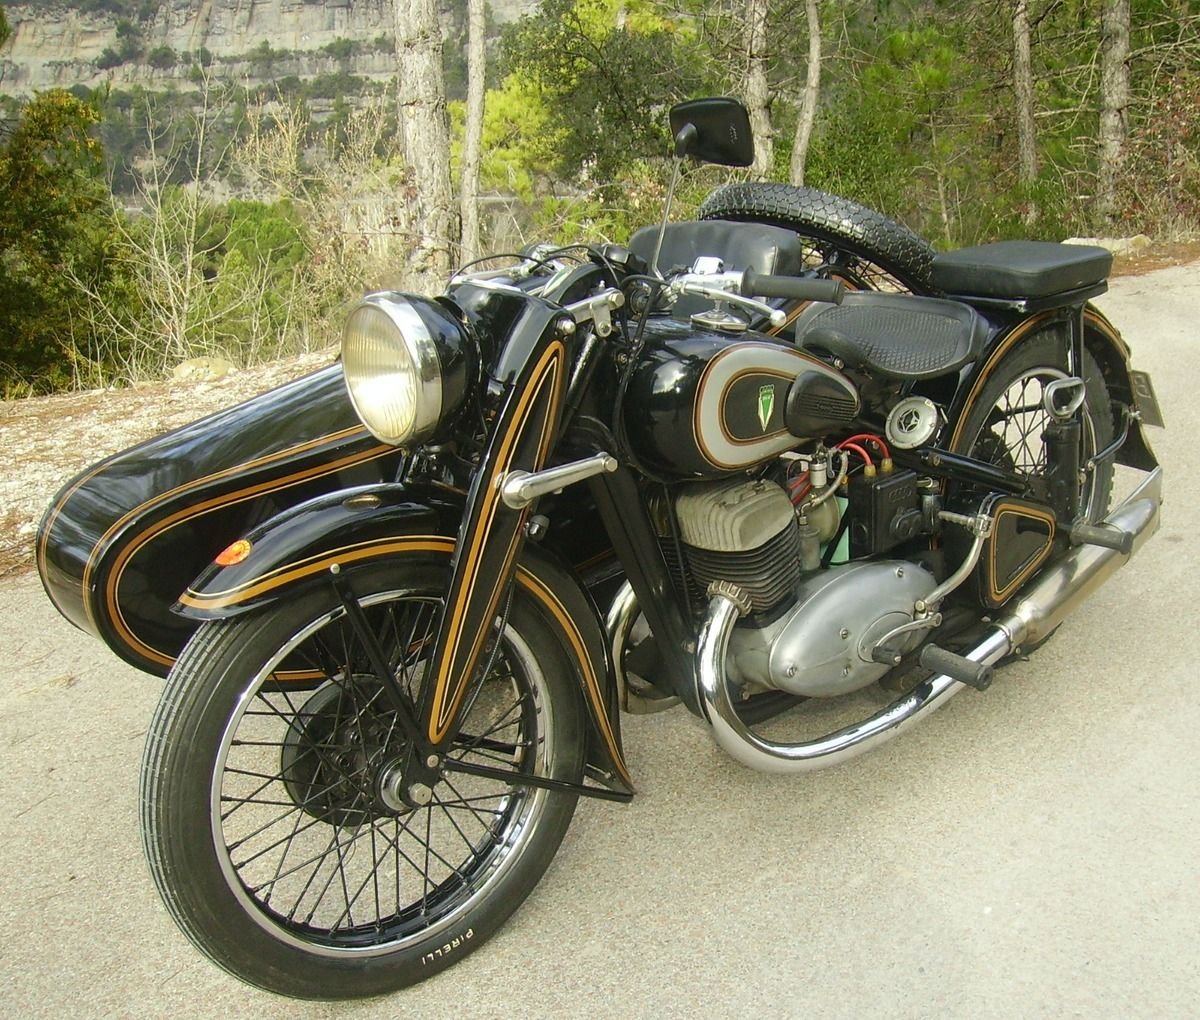 DKW nz 500